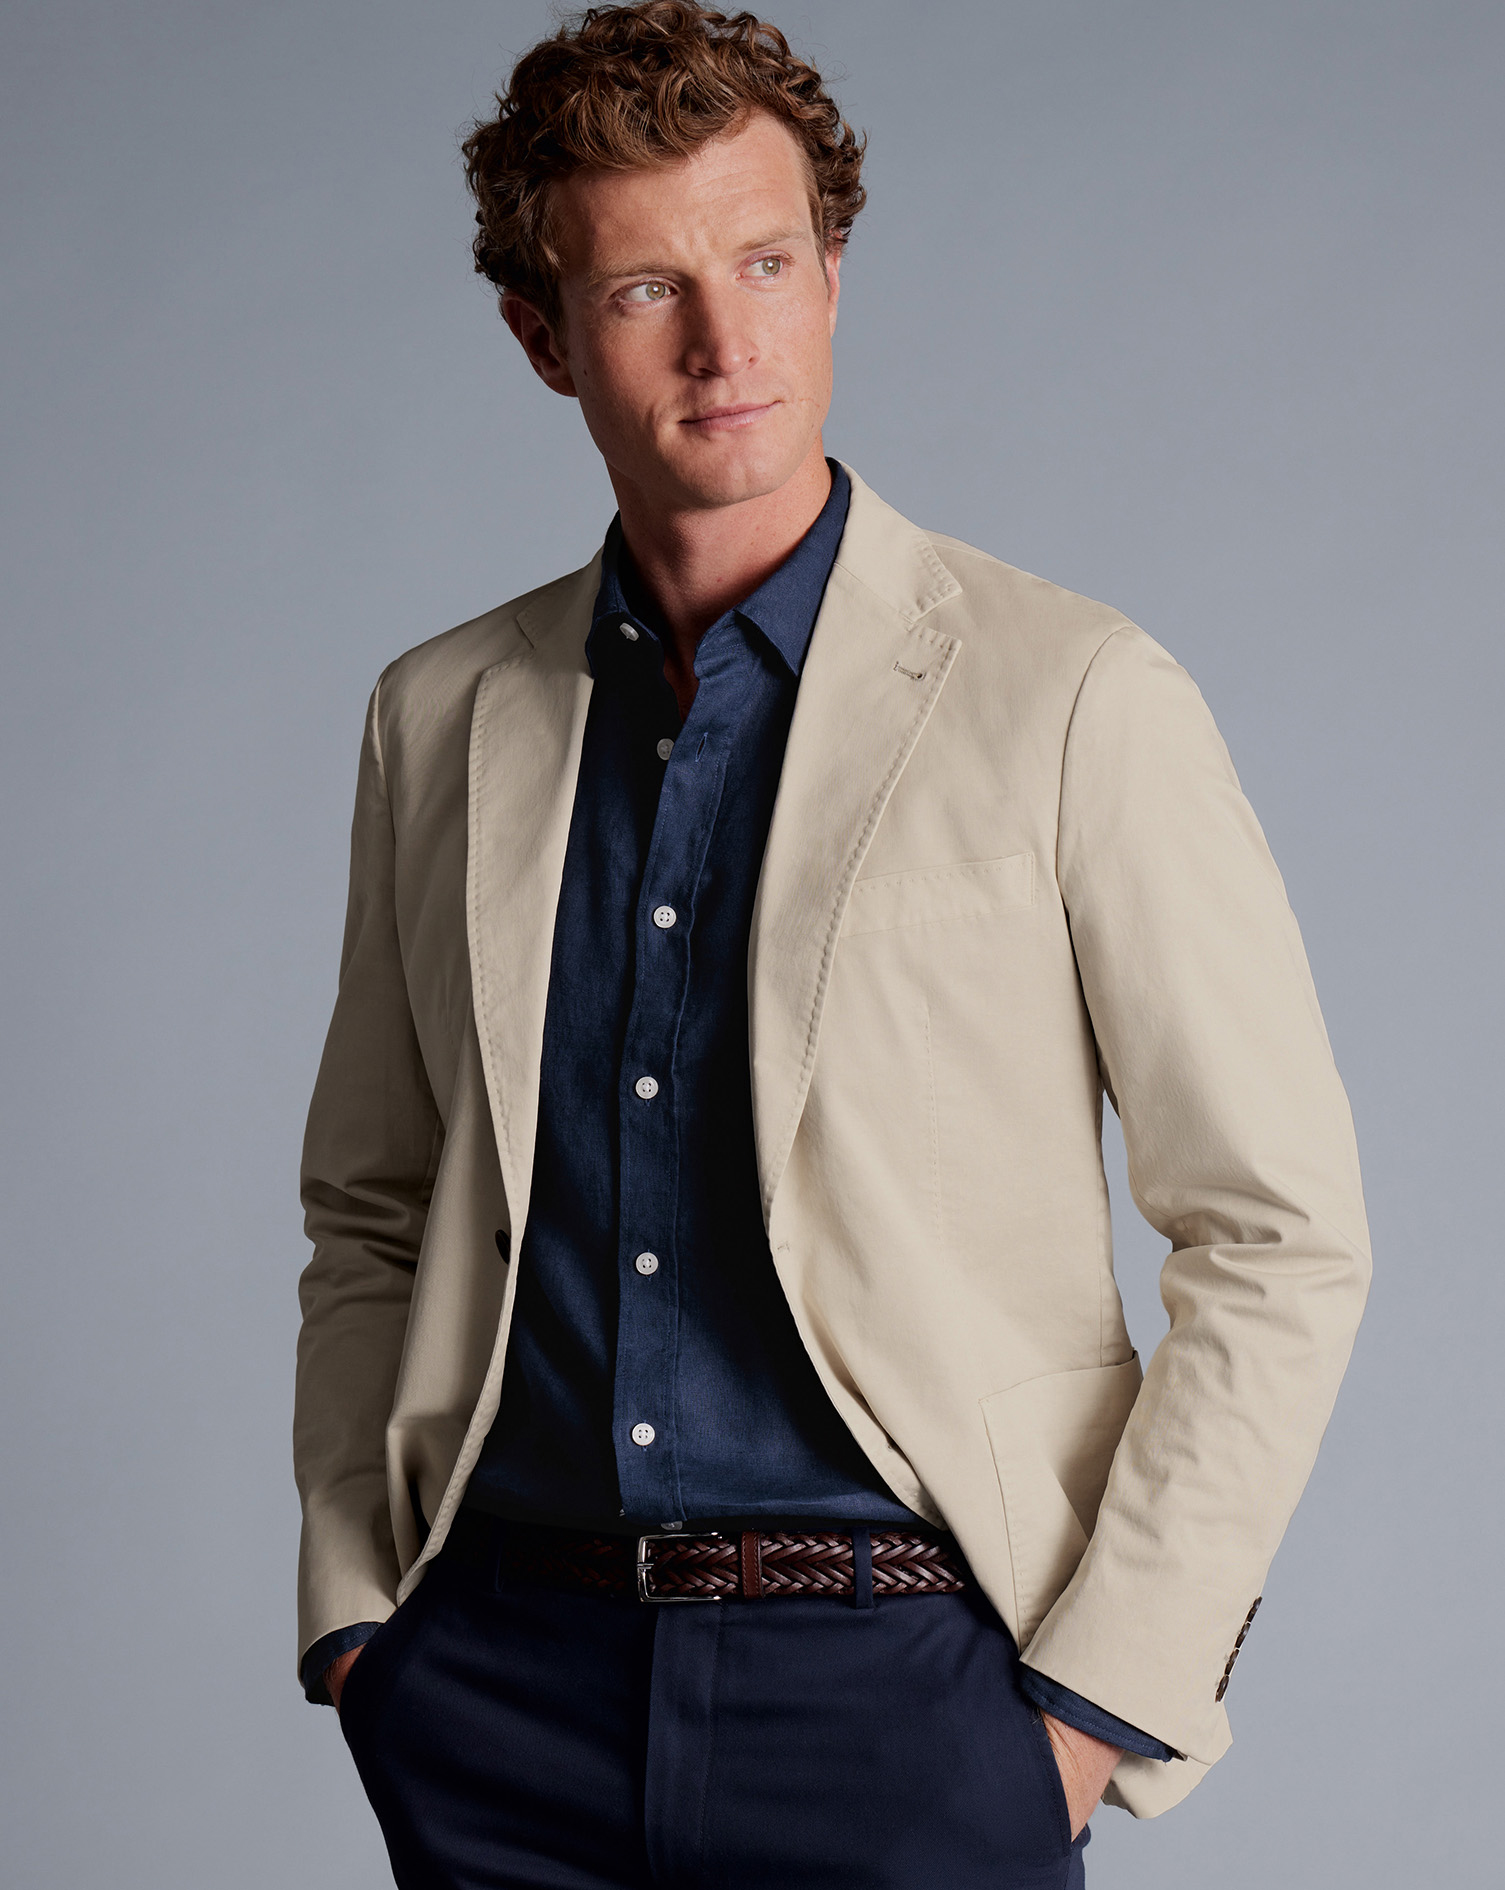 Charles Tyrwhitt Stretch Garment Dyed na Jacket - Limestone Neutral Size 38R Cotton
